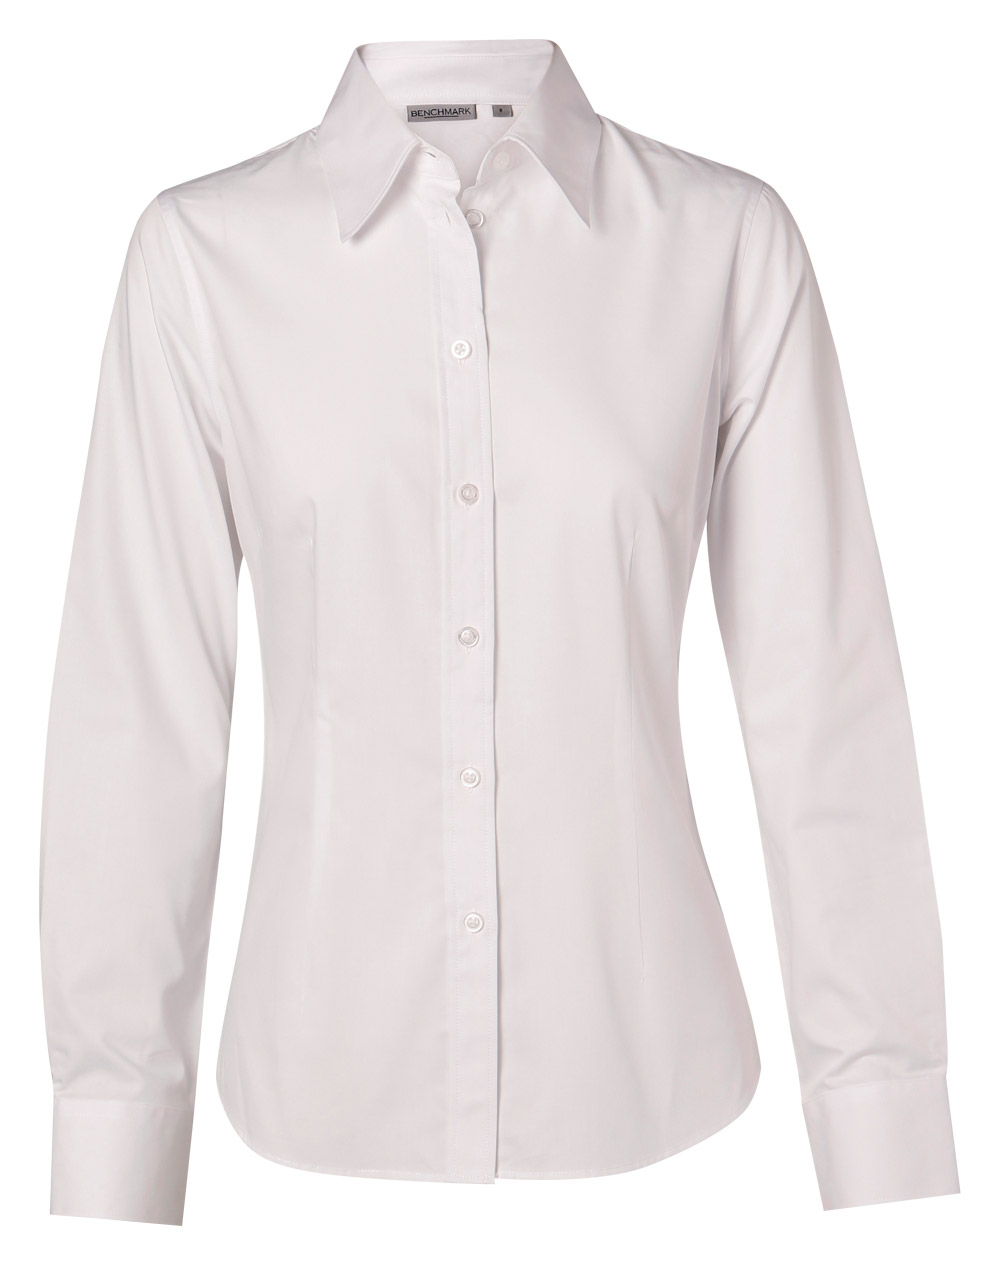 M8020l M8020q M8020s Women S Cotton Poly Stretch Long Sleeve Shirt Fcw